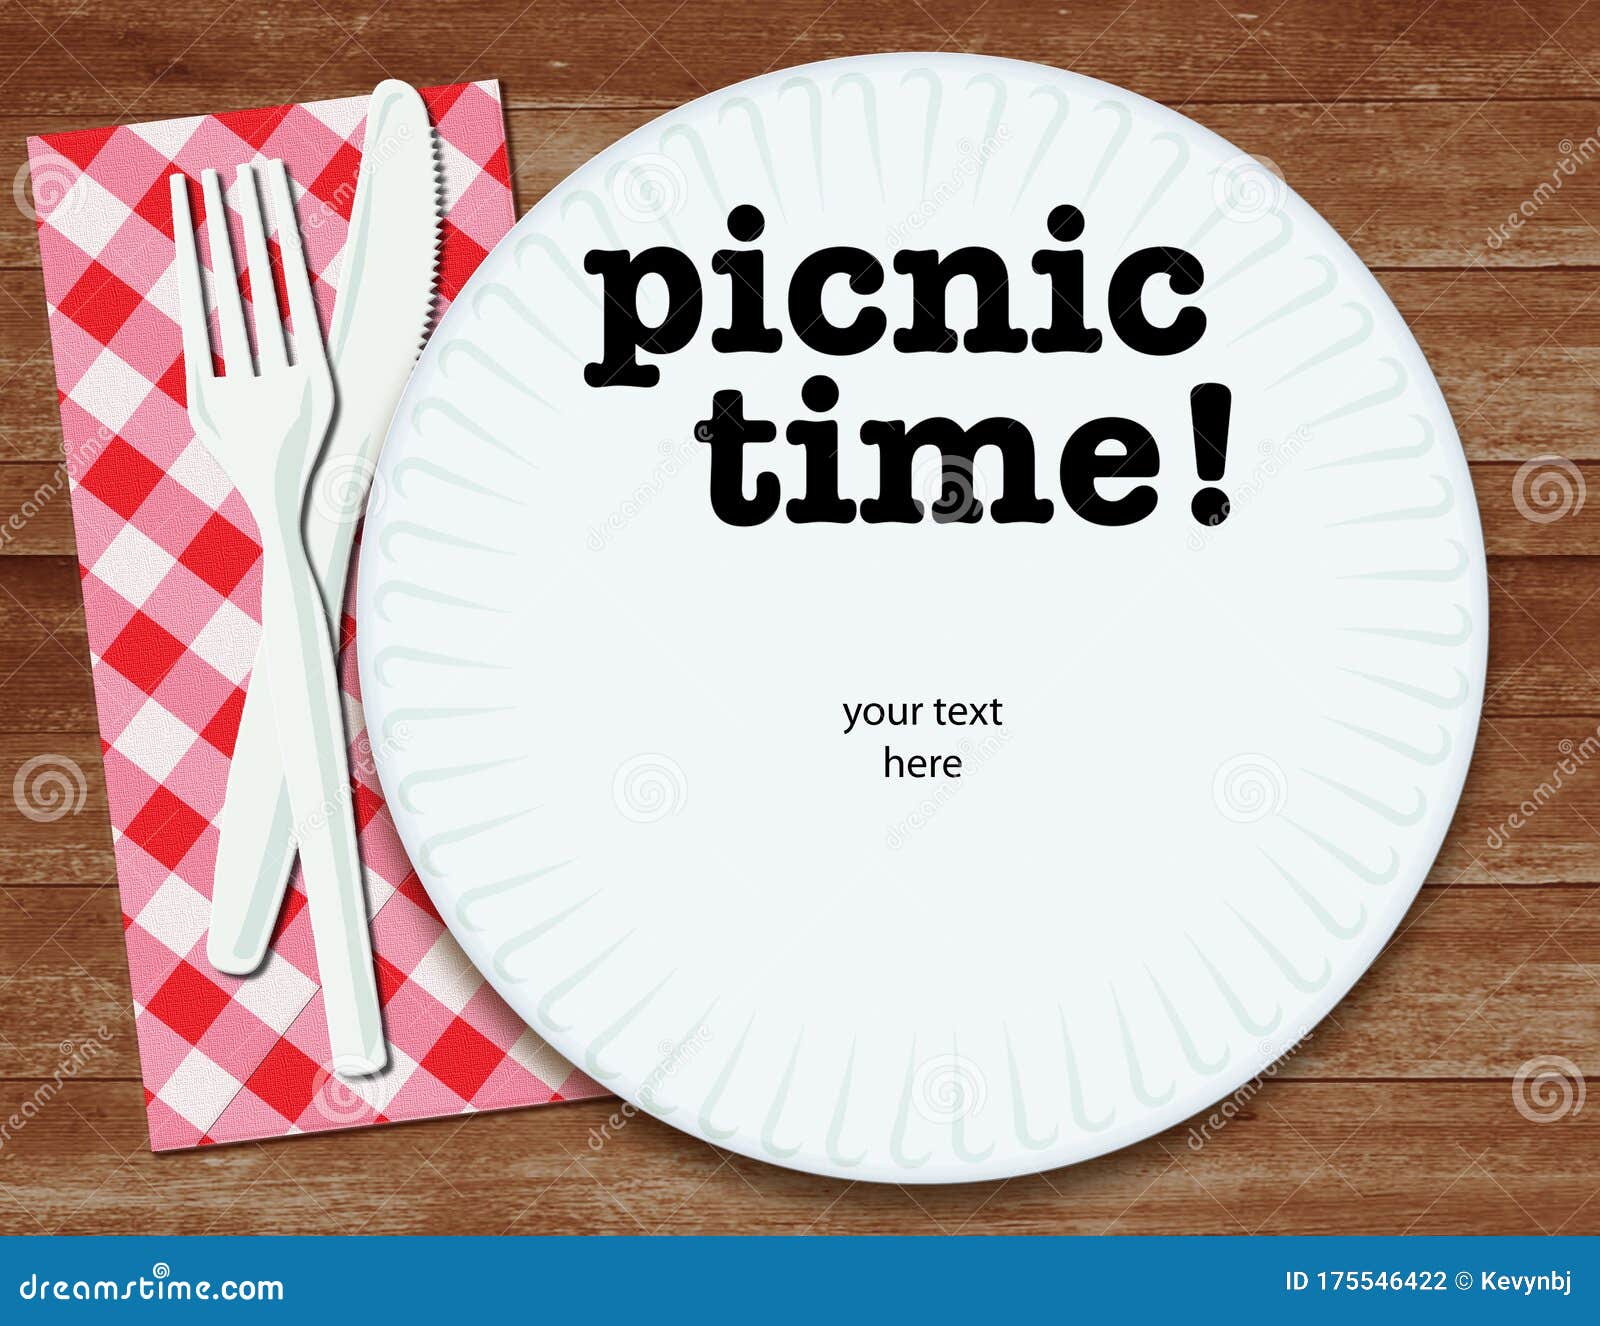 picnic invitation flyer art on wooden table